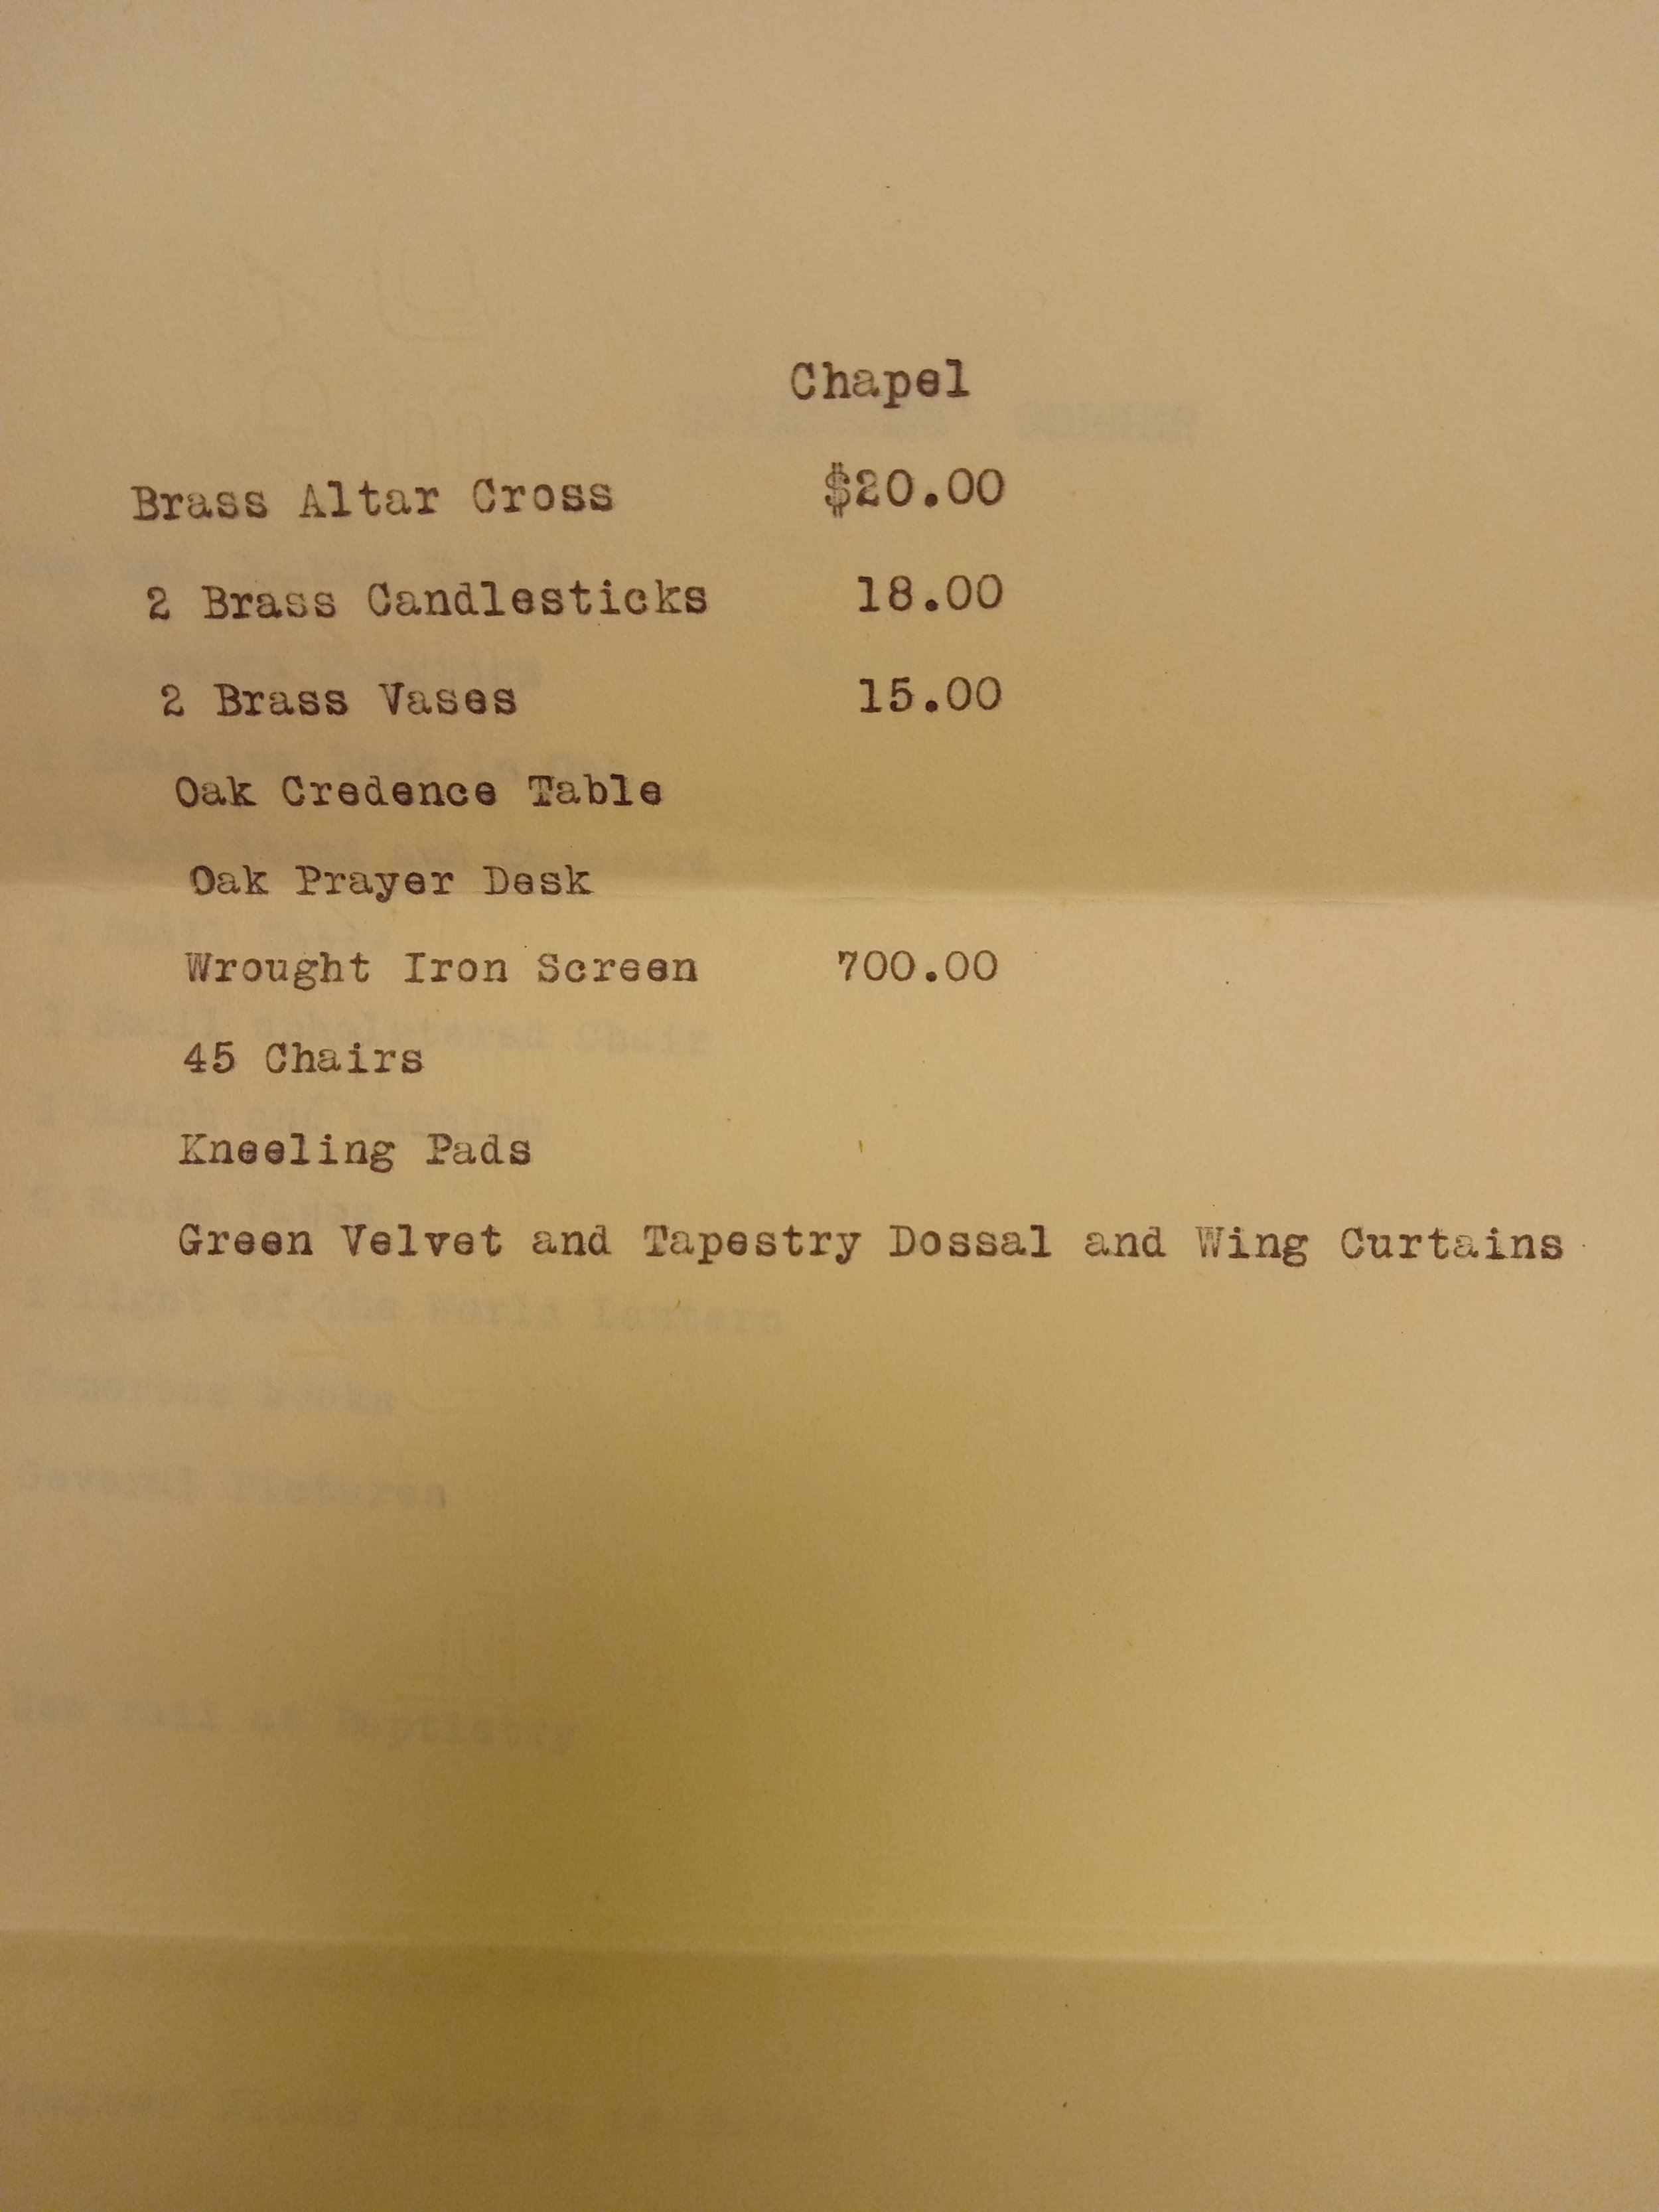 1939 Chapel INventory Supplement.jpg